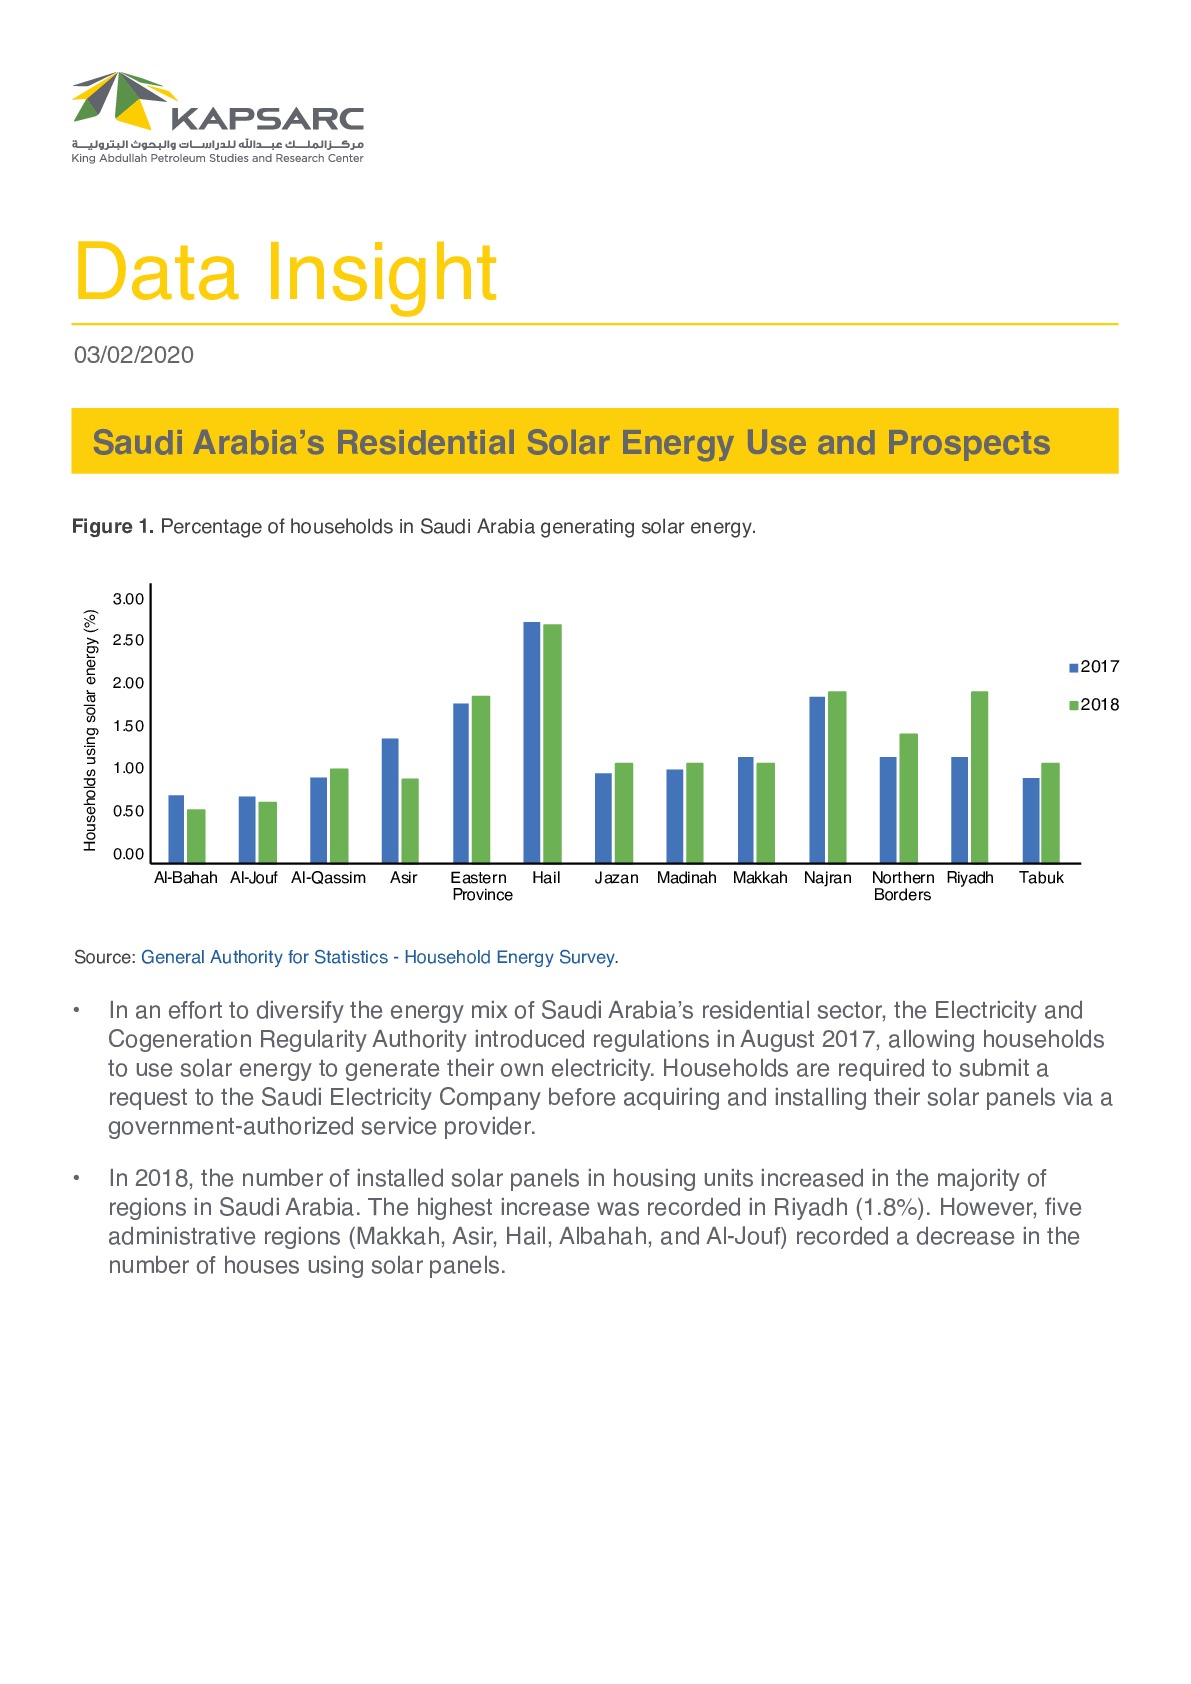 Saudi Arabia’s Residential Solar Energy Use and Prospects